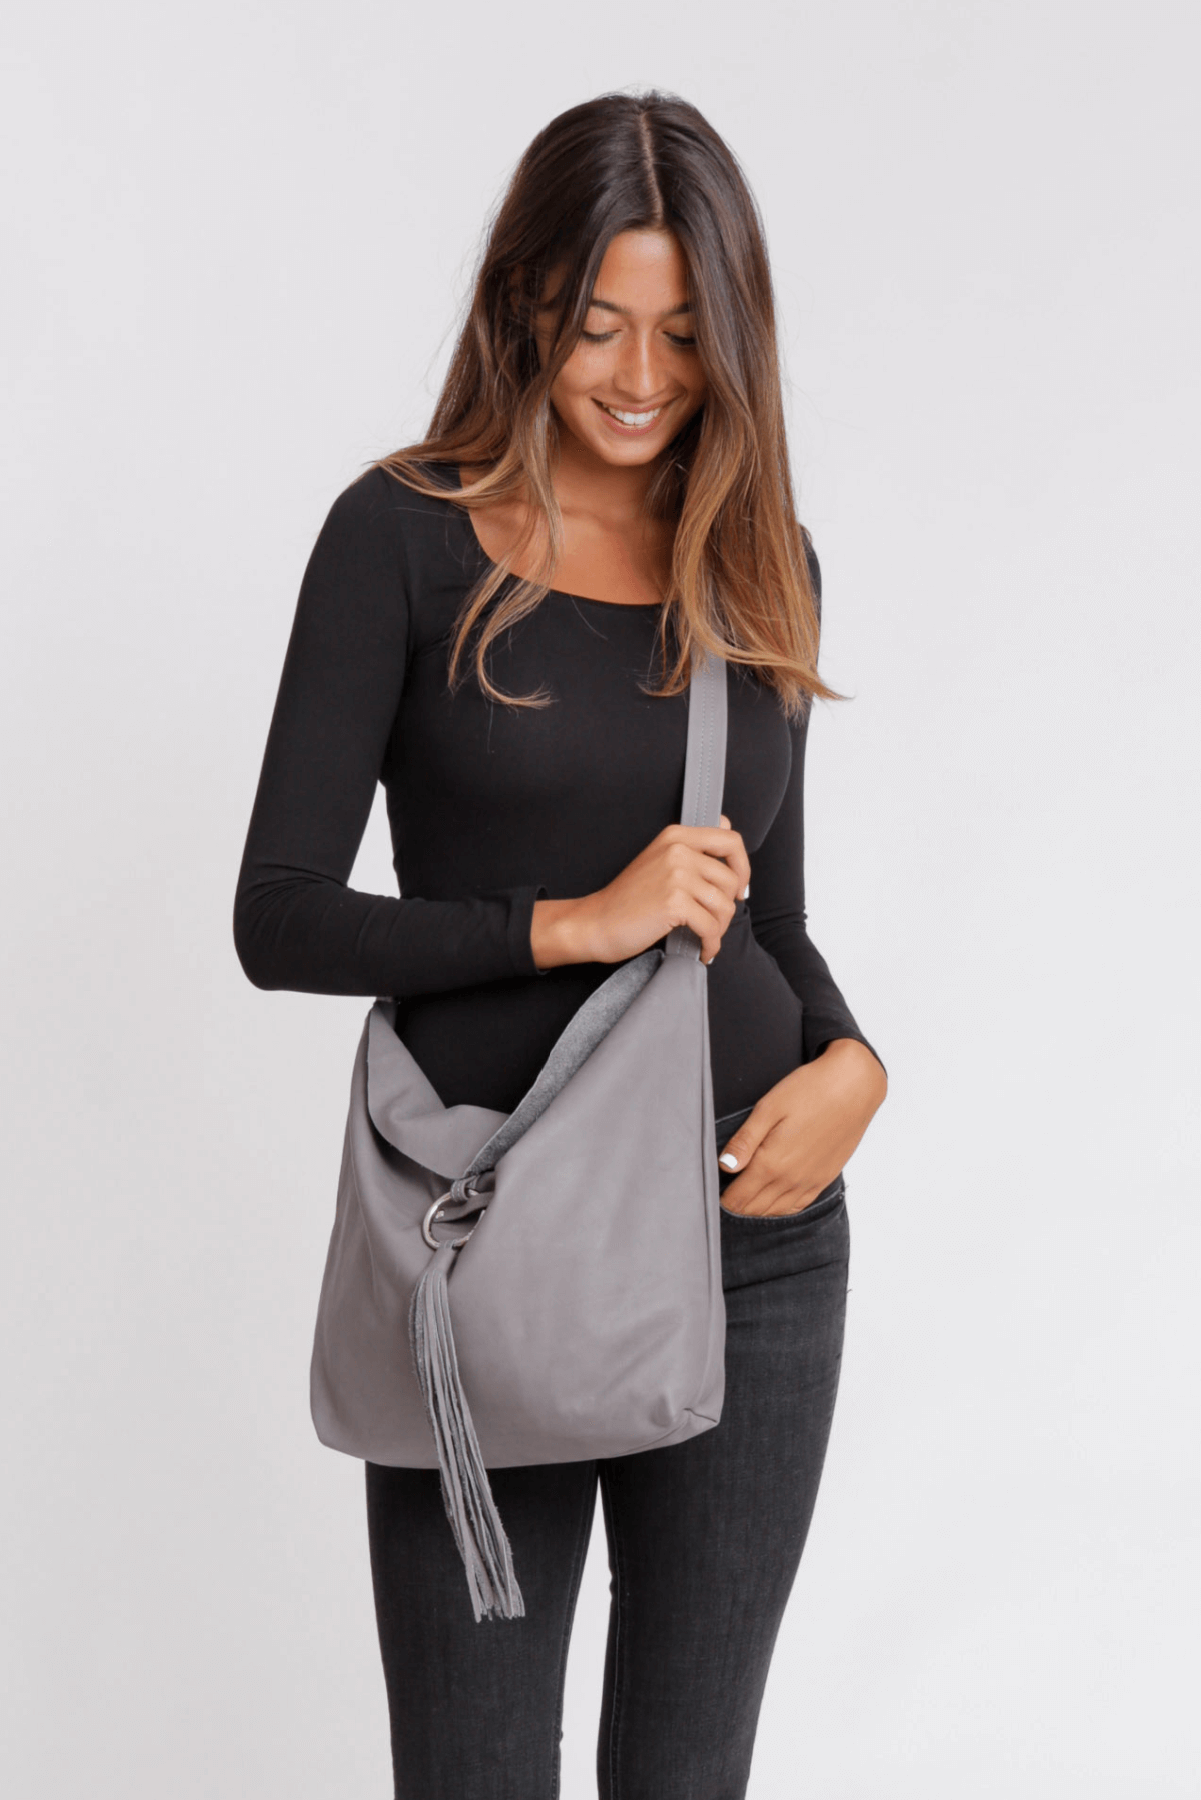 Hobo Crossbody Bag, Leather Purse | Mayko Bags Gray / No Lining